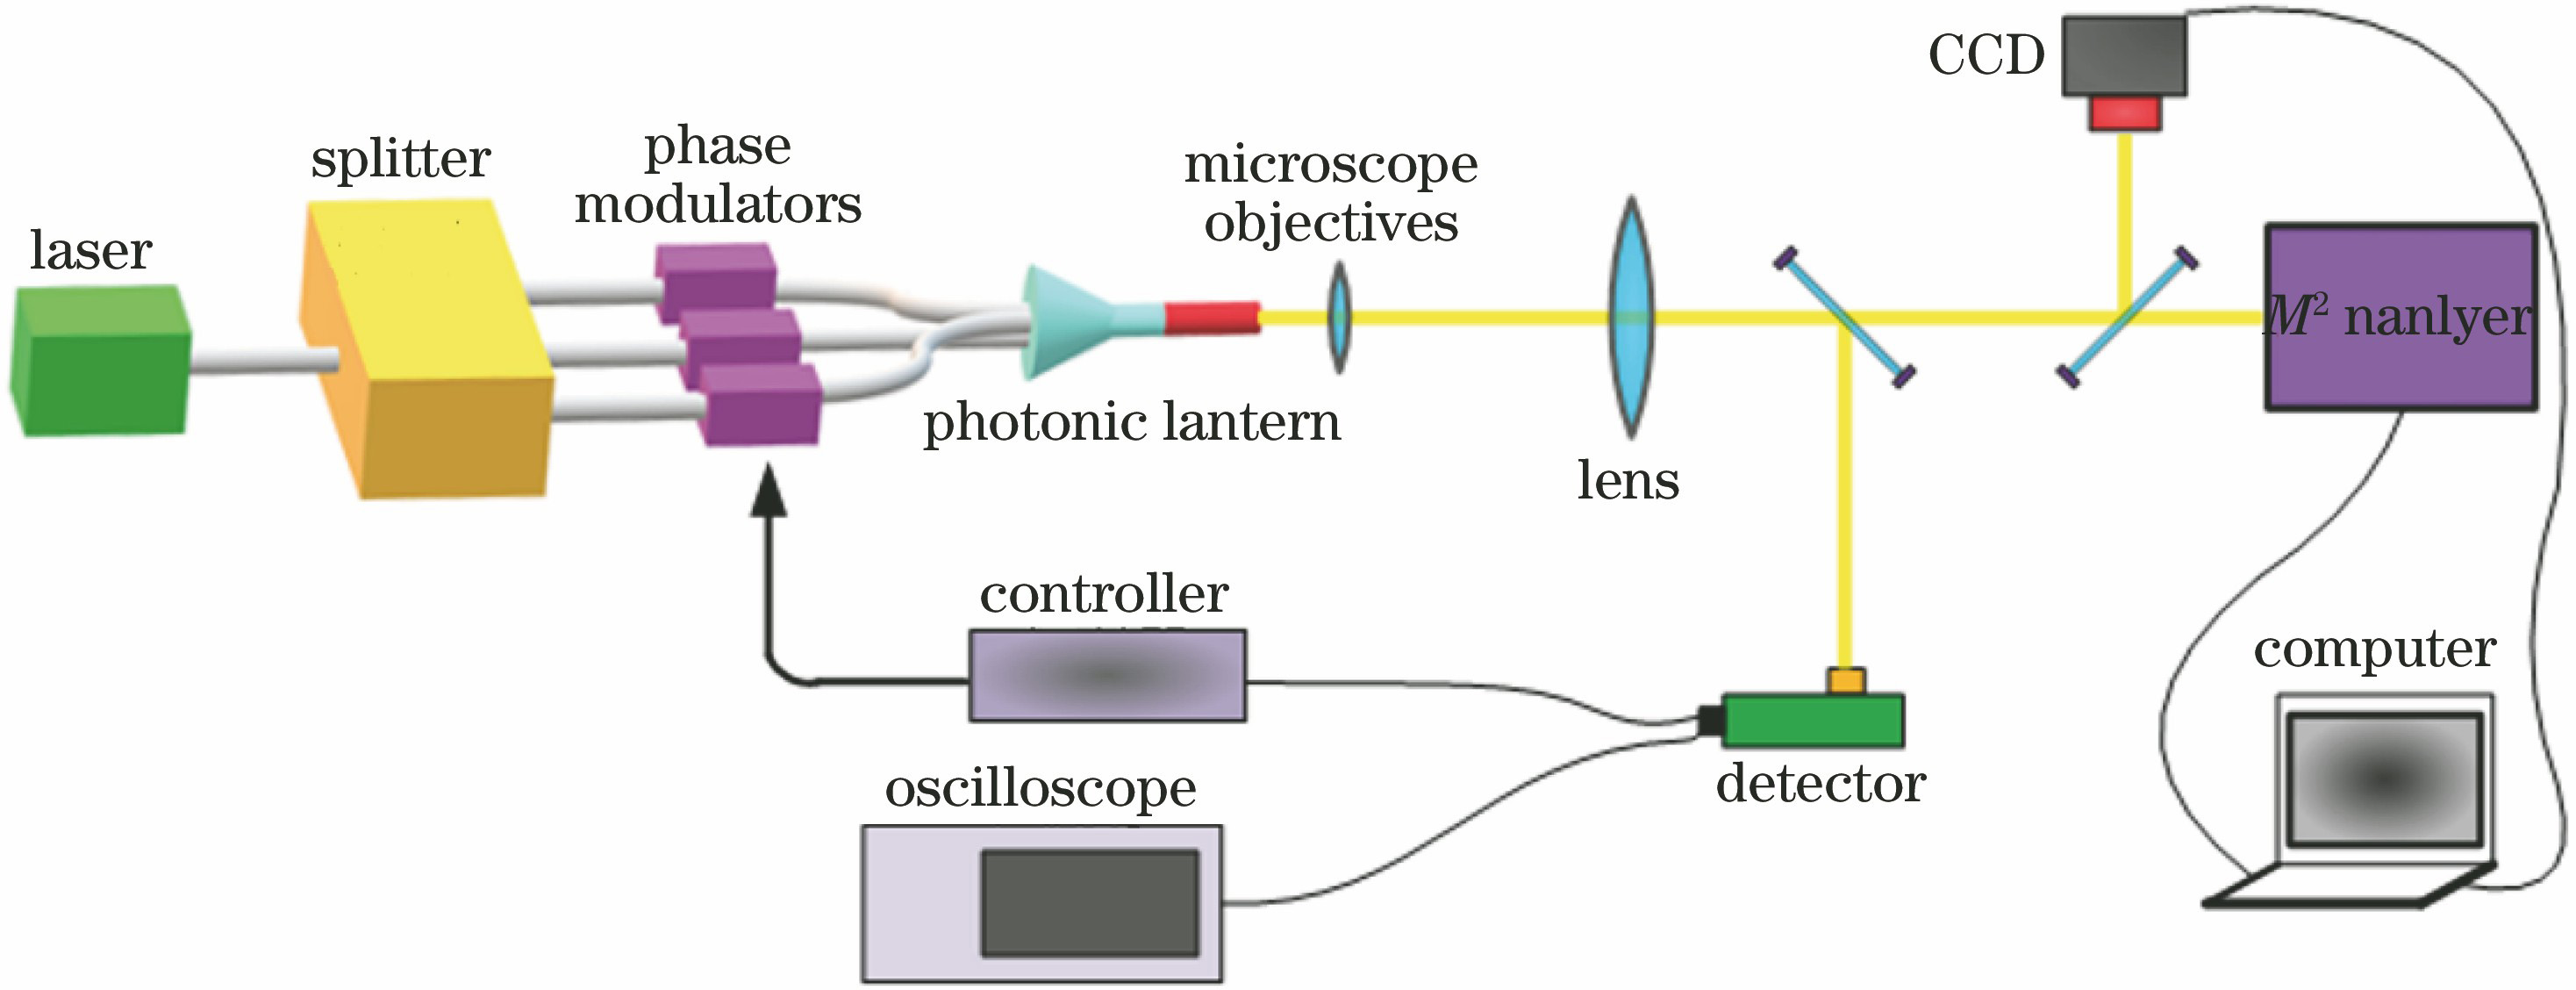 Spatial pattern adaptive control system based on photonic lantern